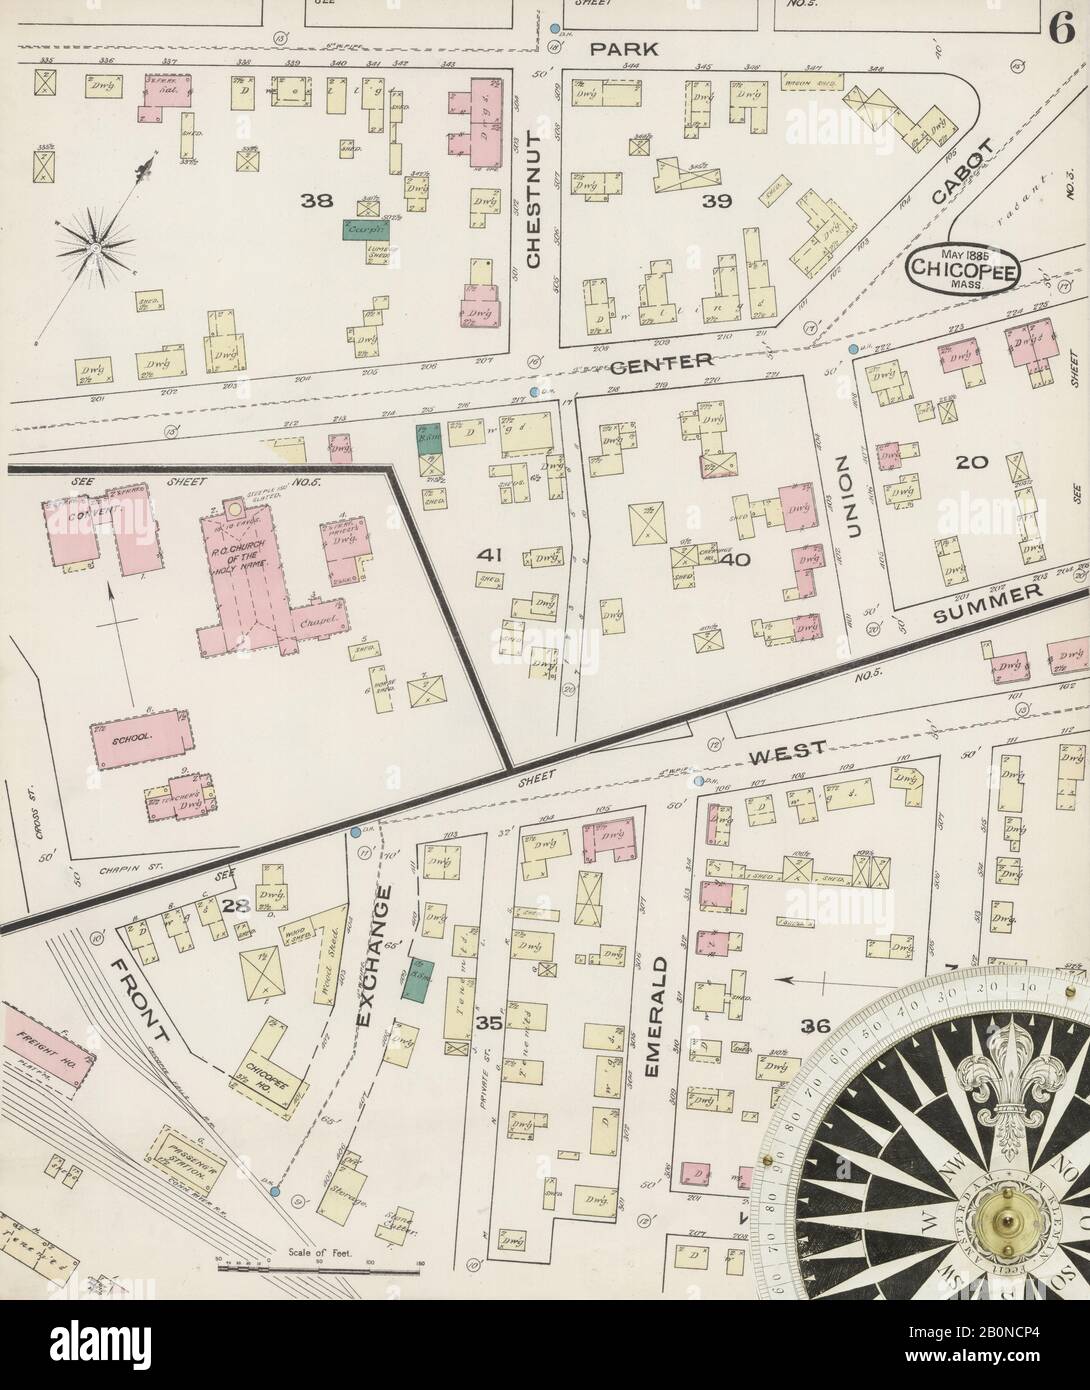 Bild 6 von Sanborn Fire Insurance Map aus Chicopee, Hampden County, Massachusetts. Mai 1885. 6 Blatt(e), Amerika, Straßenkarte mit einem Kompass Aus Dem 19. Jahrhundert Stockfoto